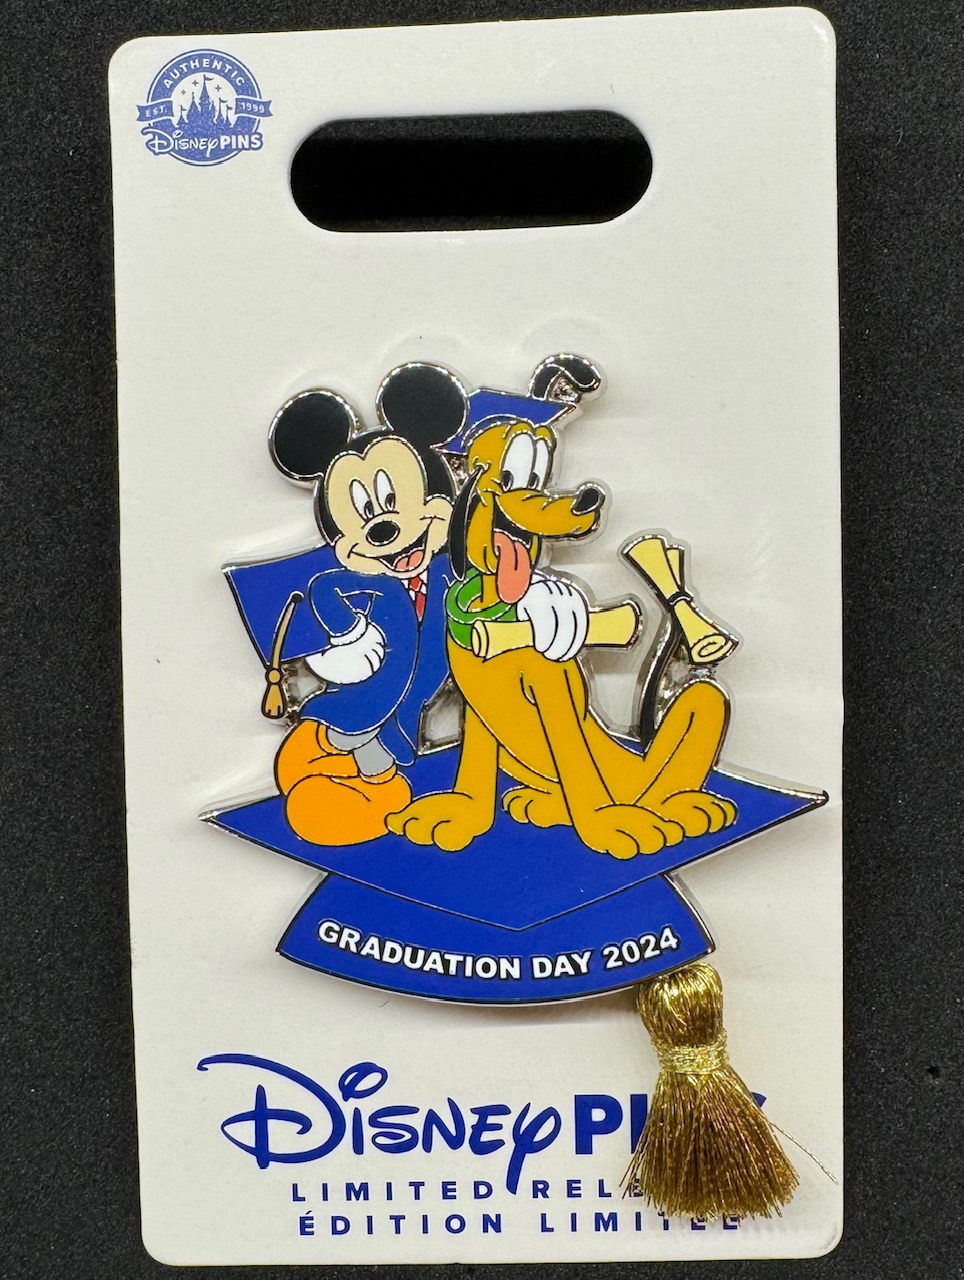 Graduation Day 2024 Disney Pin